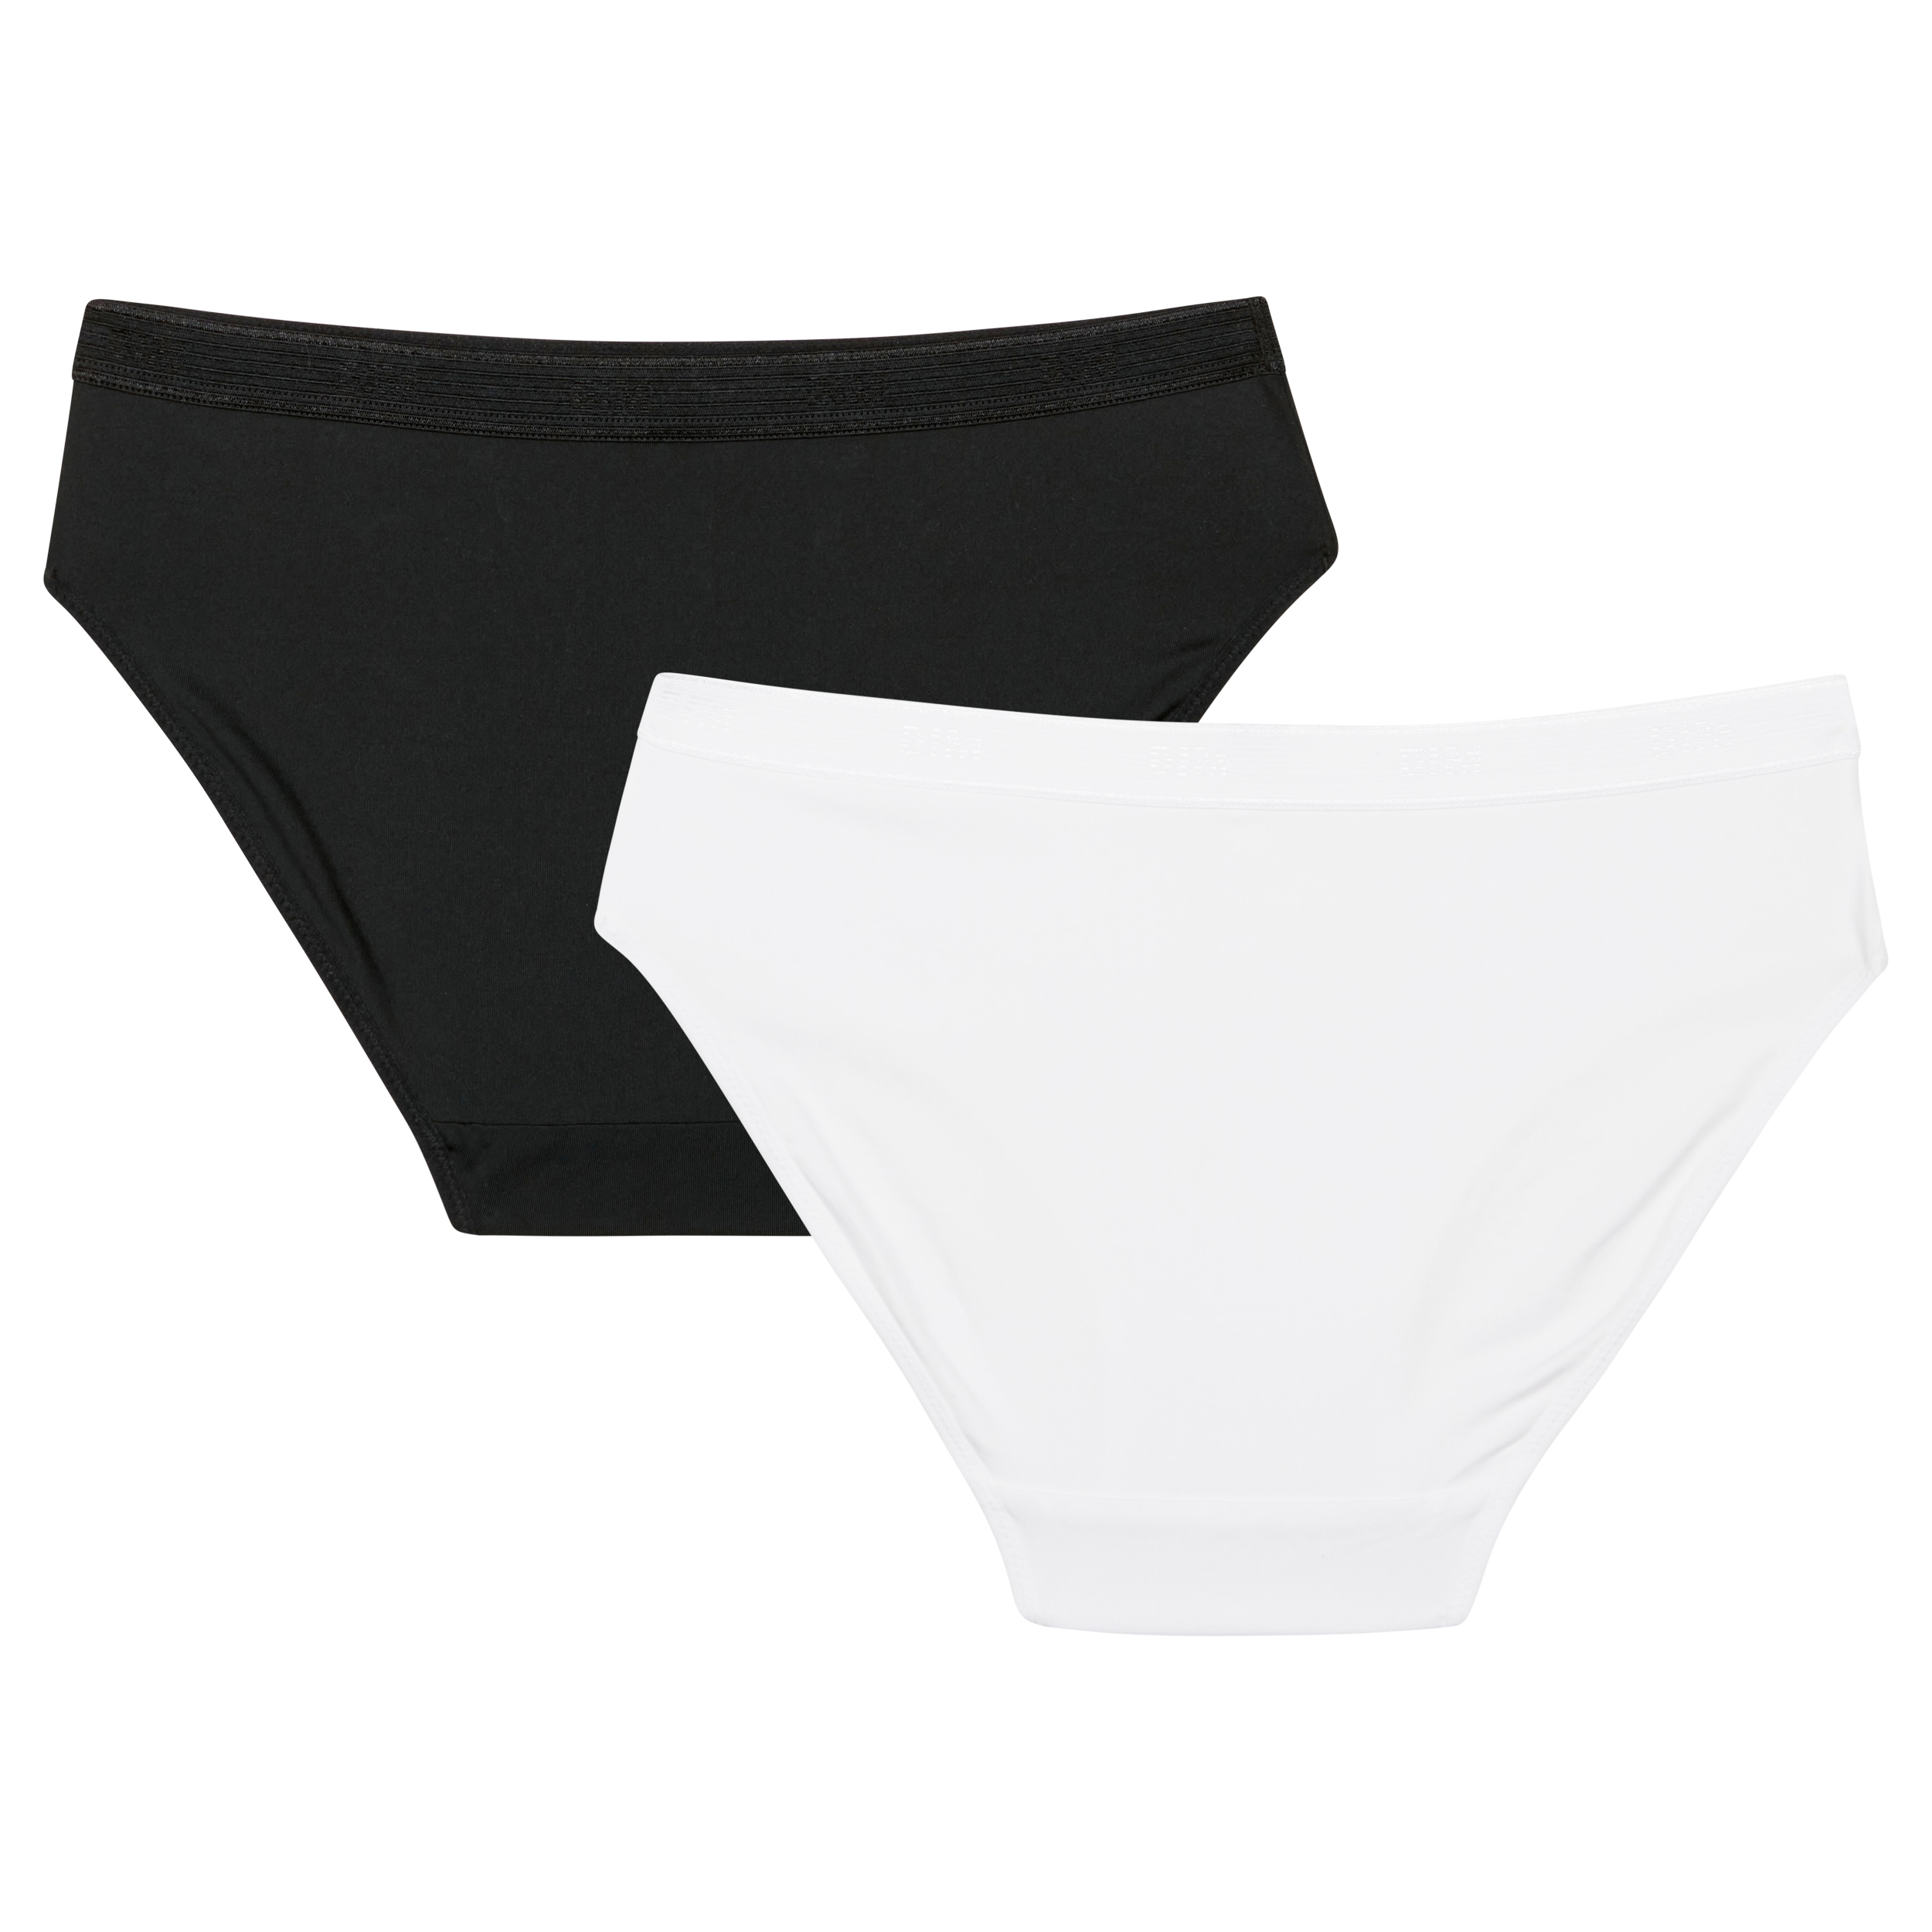 Calaméo - Tsawq Net Dice Underwear 12 11 2021 01